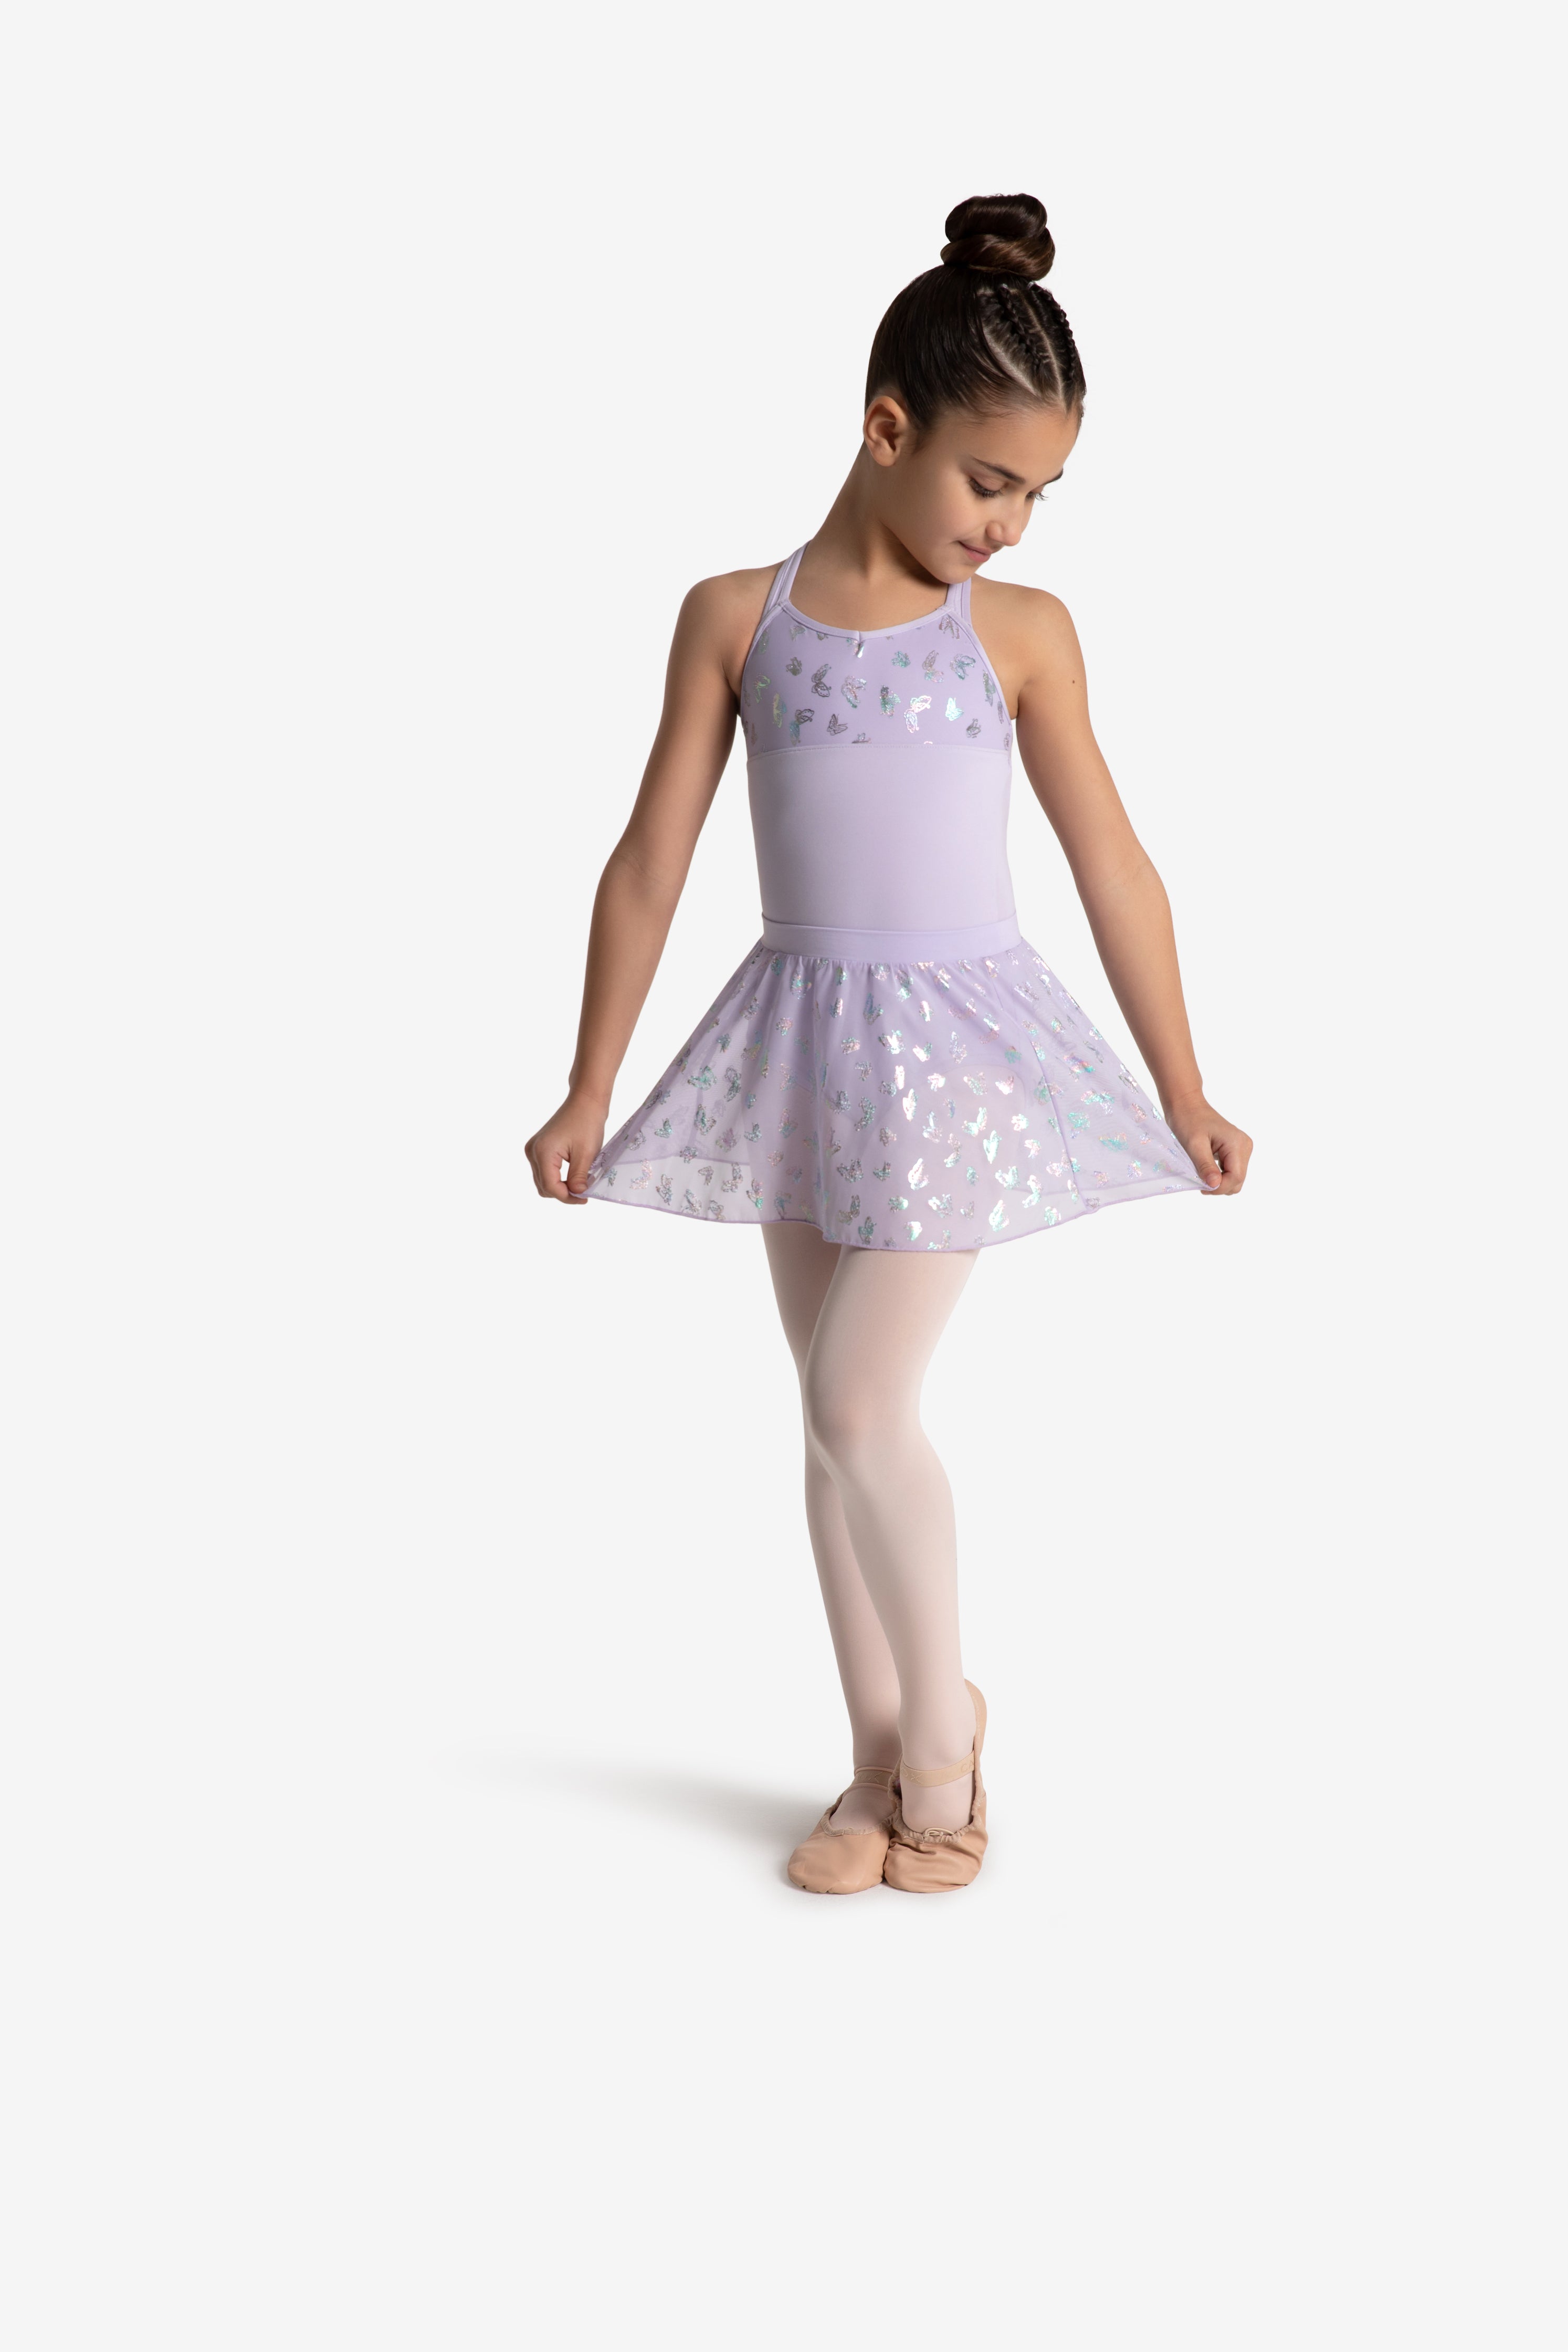 Shimmer Tights Light Flesh Stirrup - Balletstuff : Children's Dance Wear